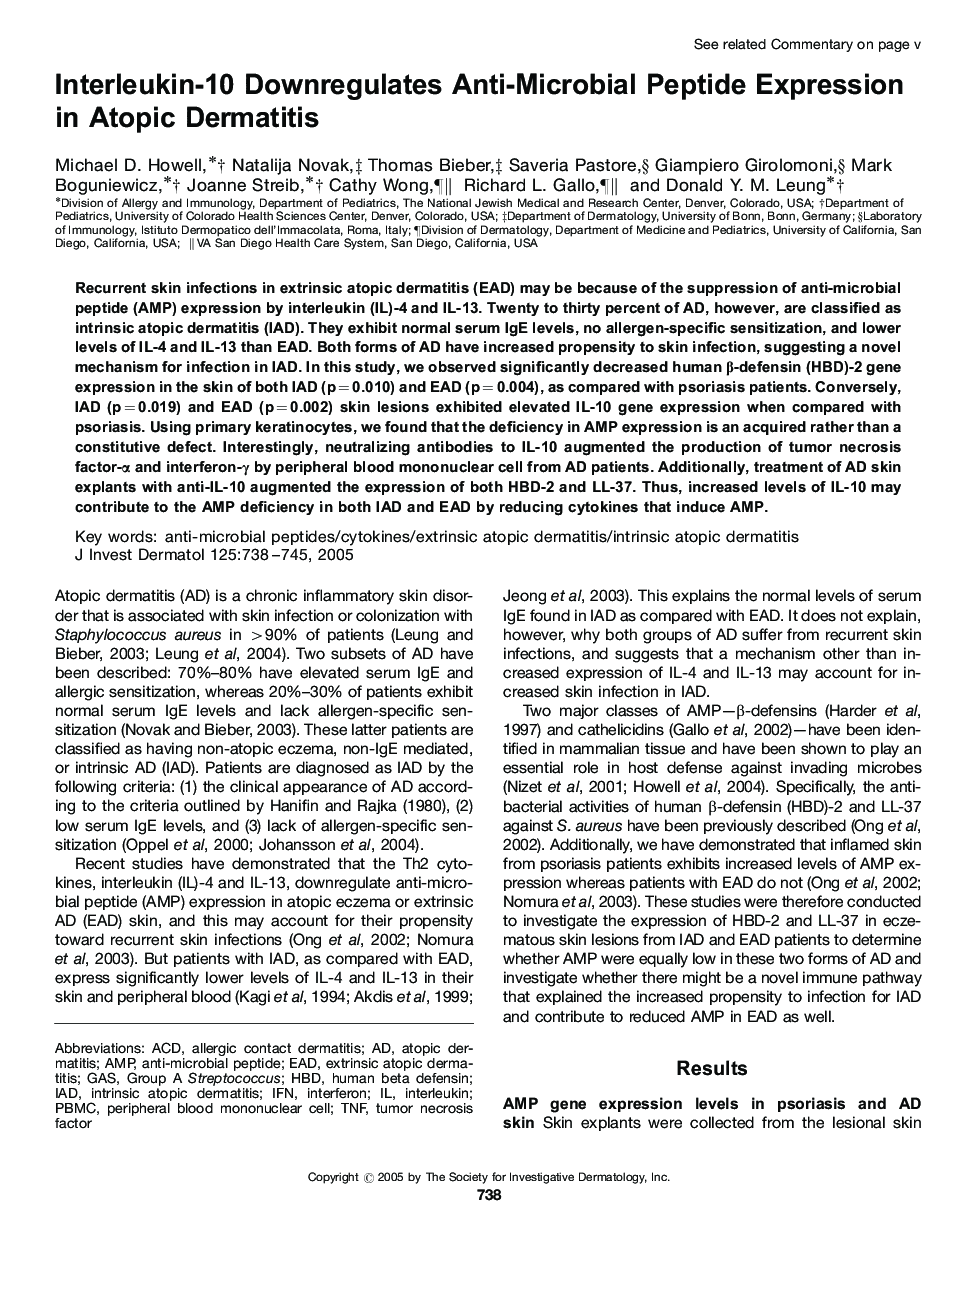 Interleukin-10 Downregulates Anti-Microbial Peptide Expression in Atopic Dermatitis